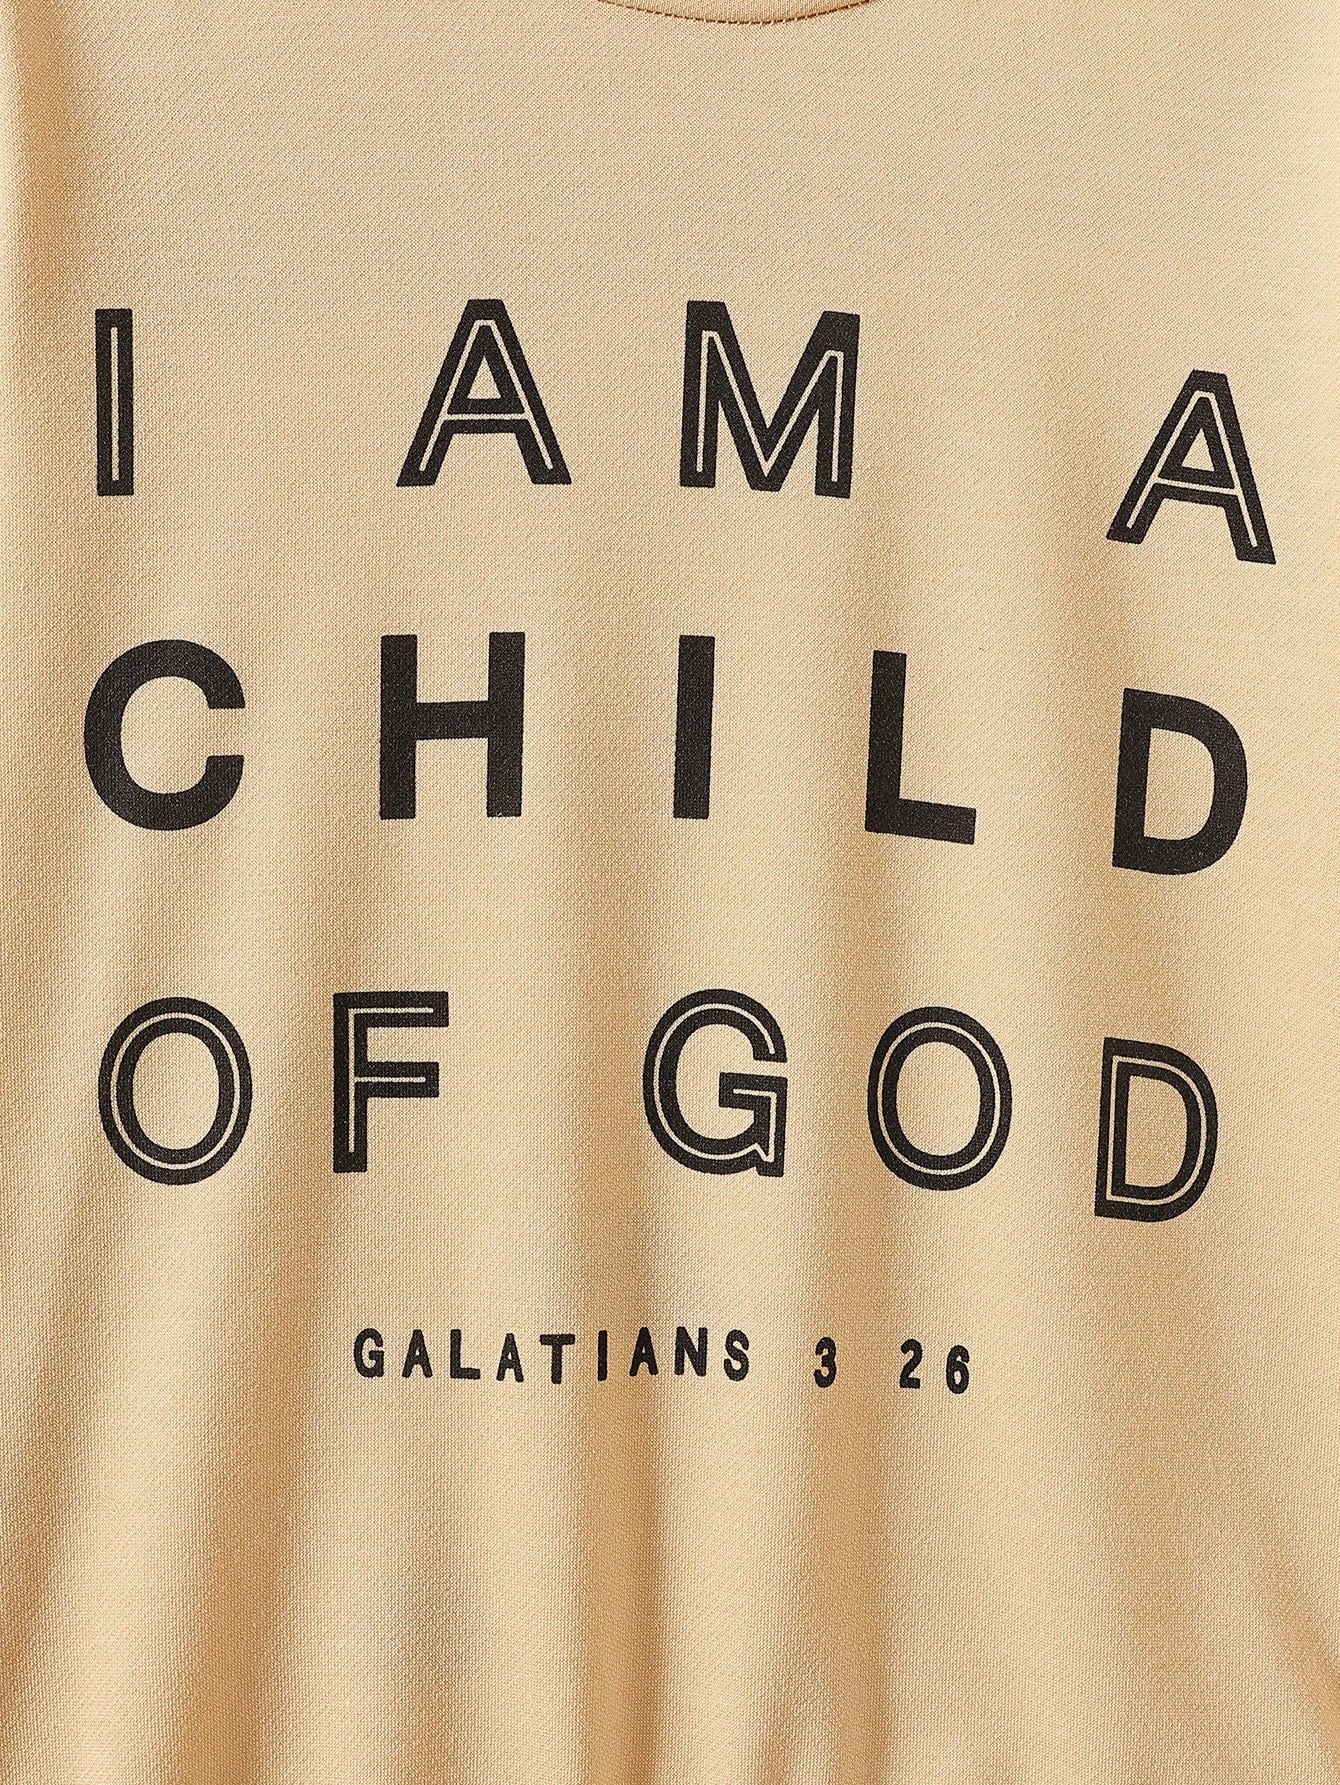 Boys I Am A Child Of God Graphic Sweatshirt